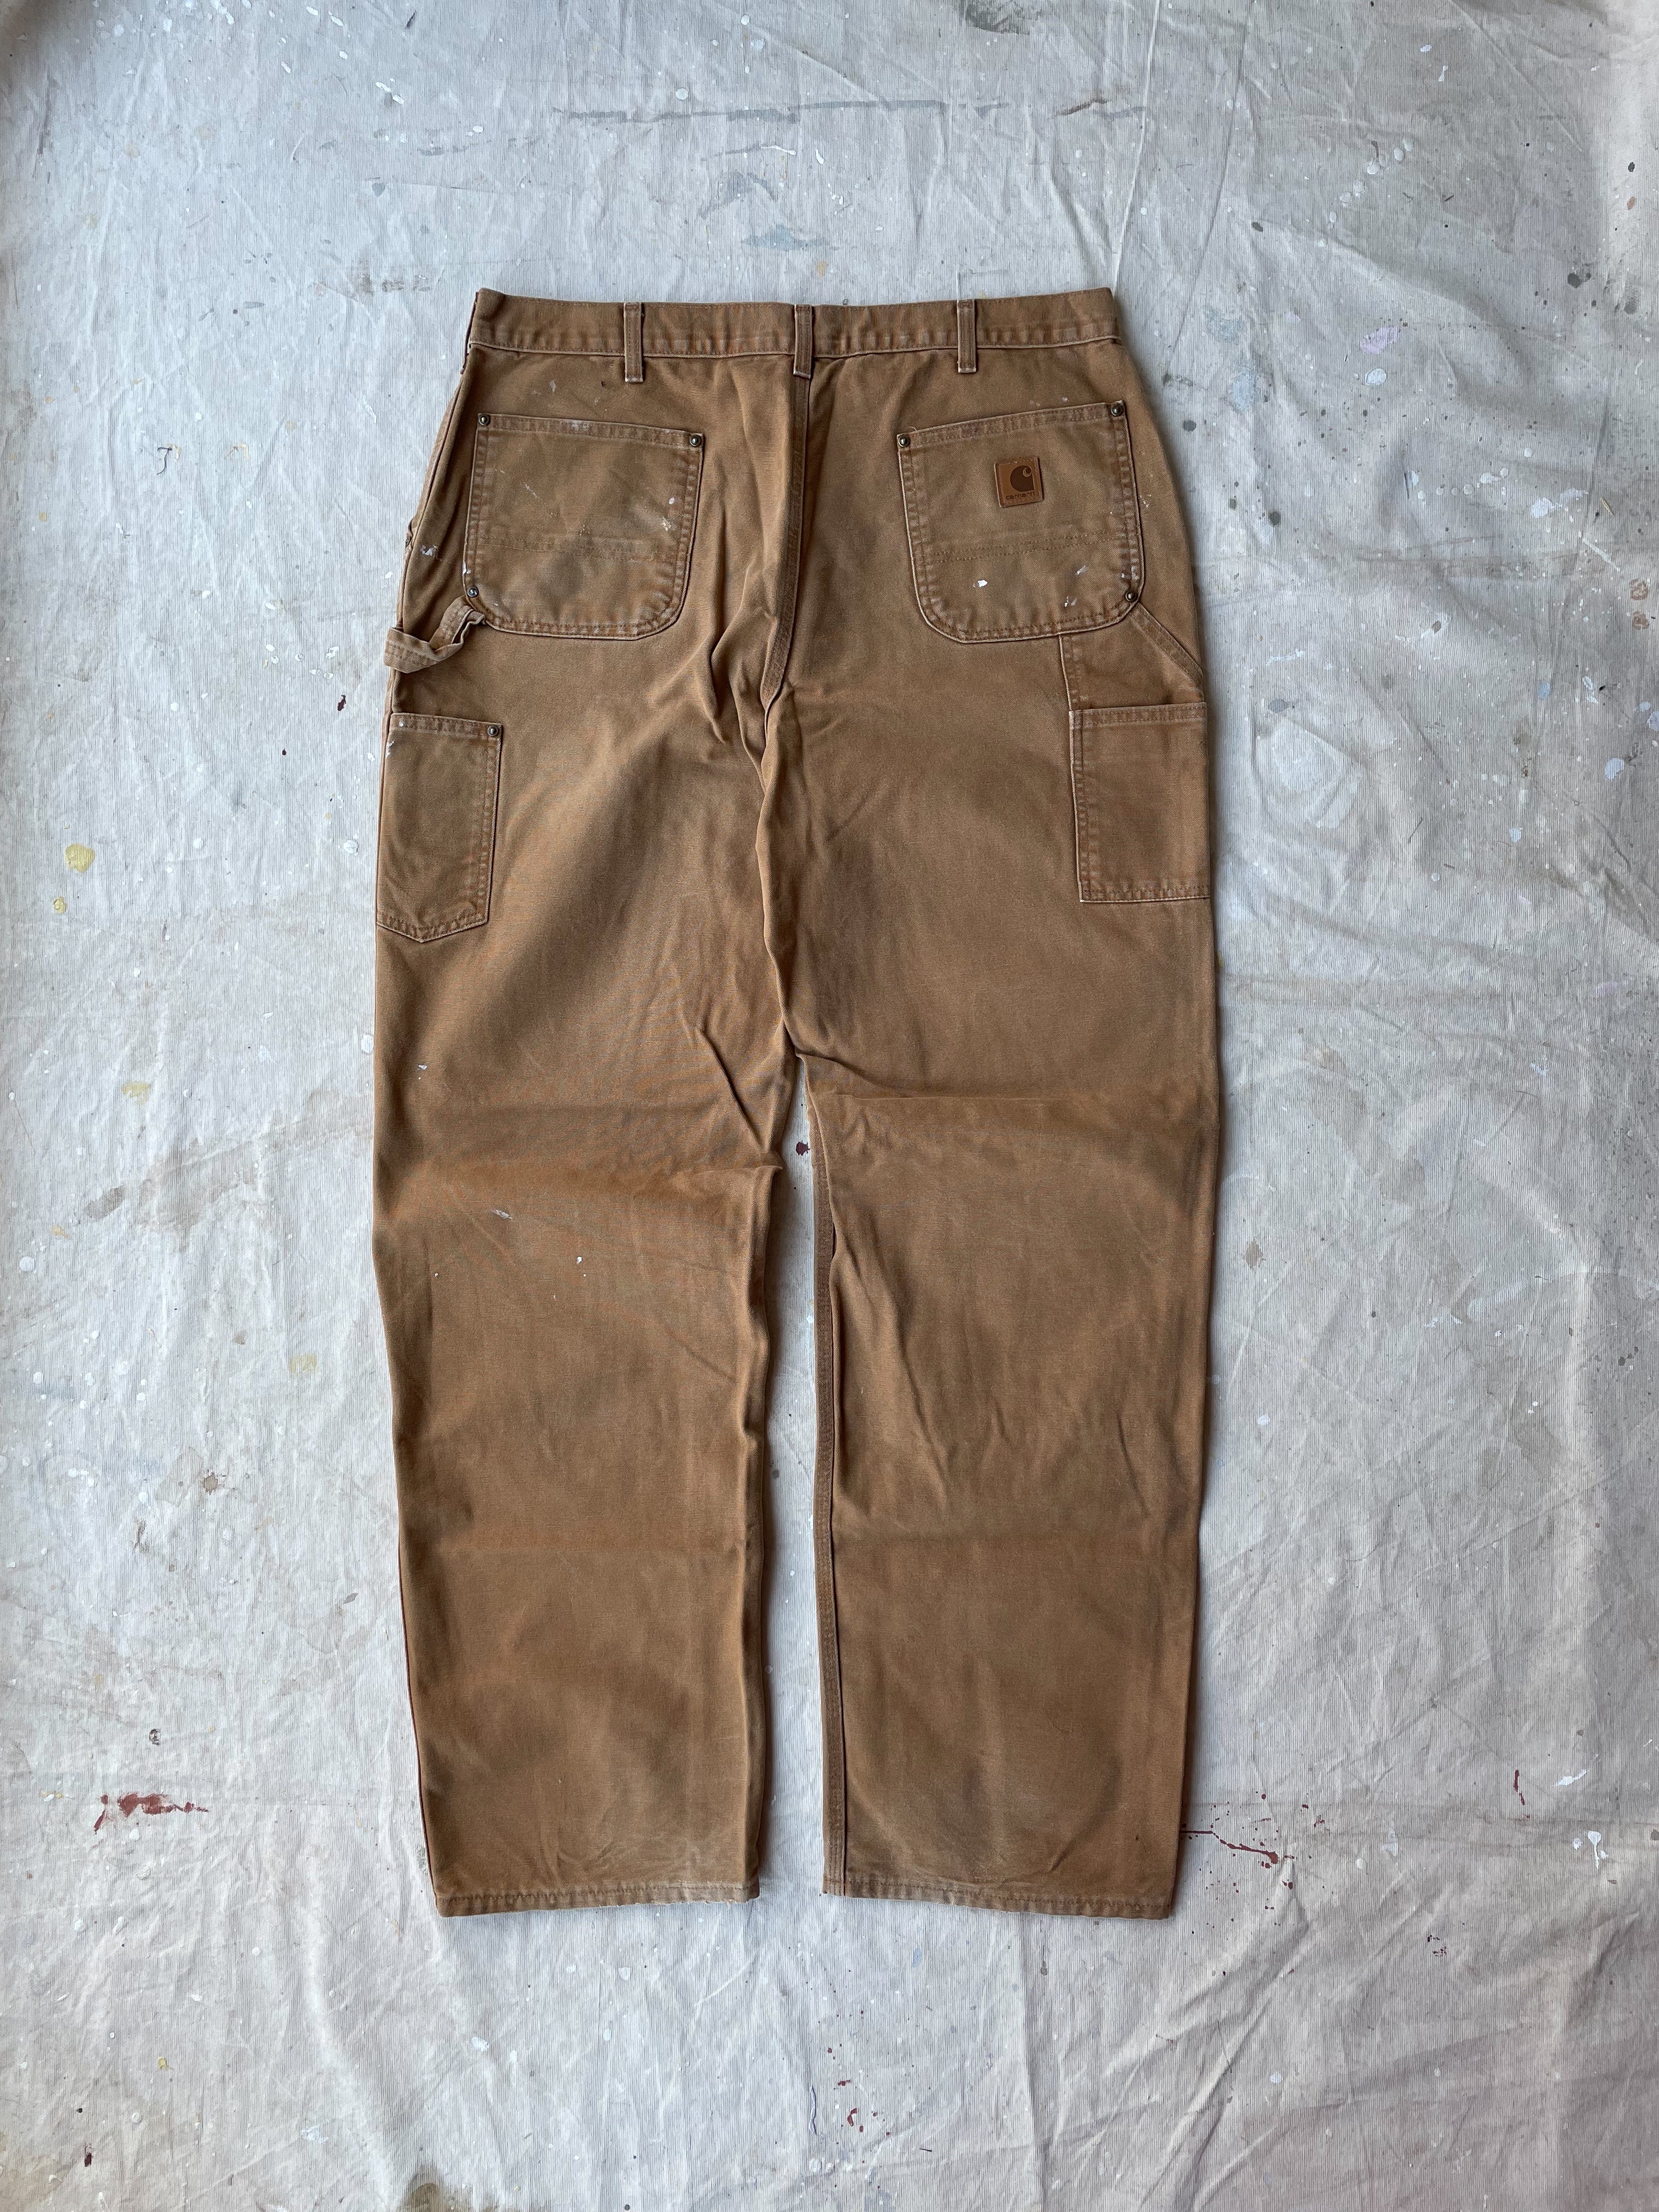 mahshu Carhartt Double Knee Pants—[38x36]